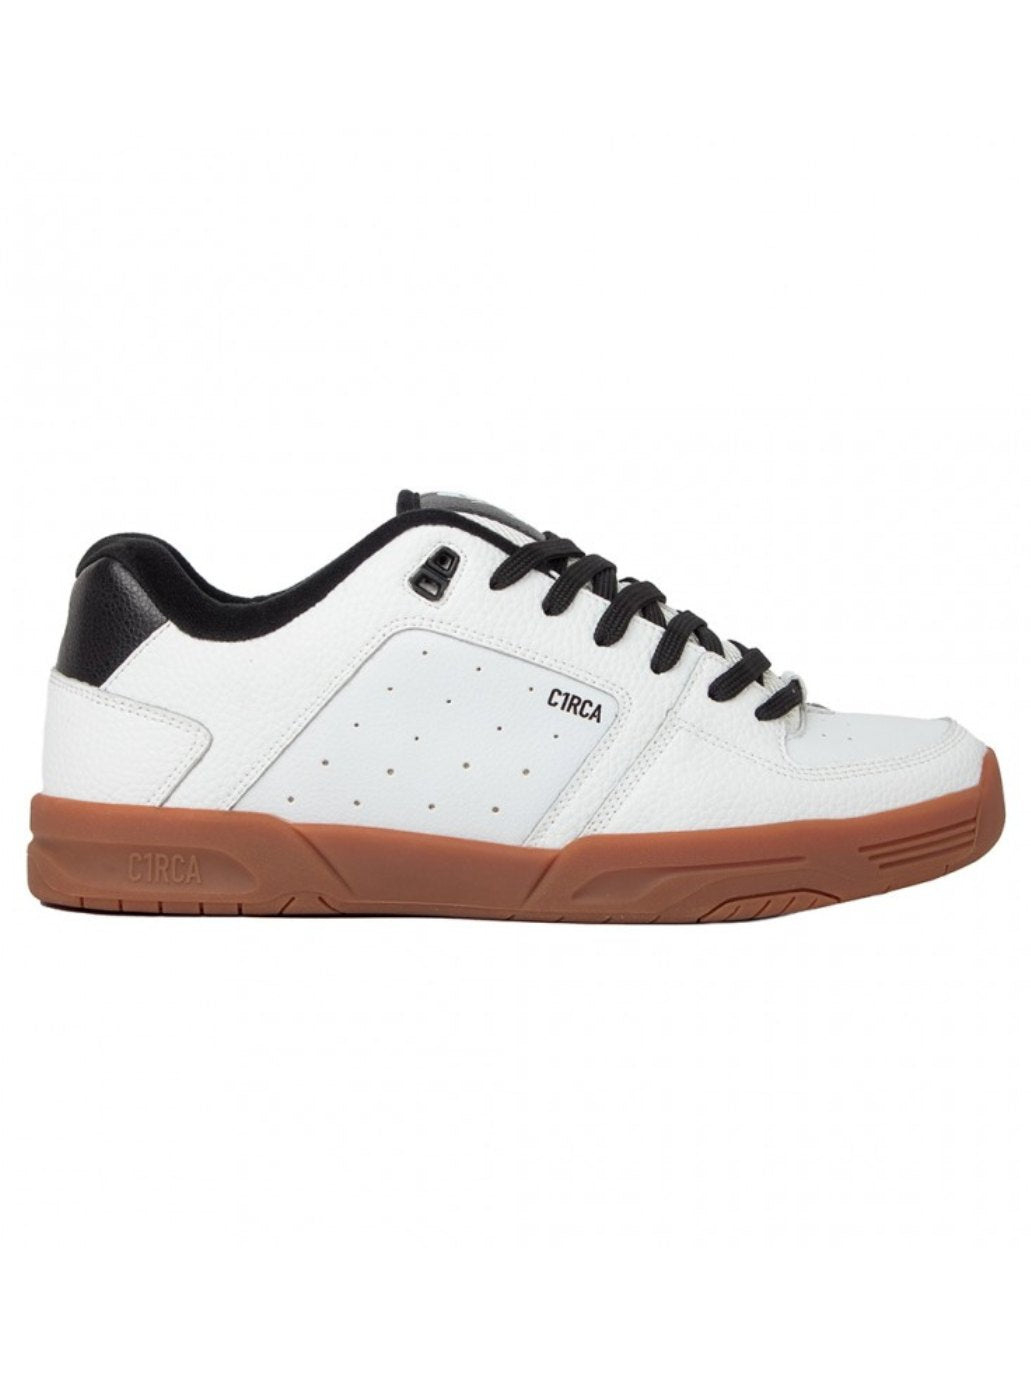 Chaussures de skate Circa 805 blanc/gomme